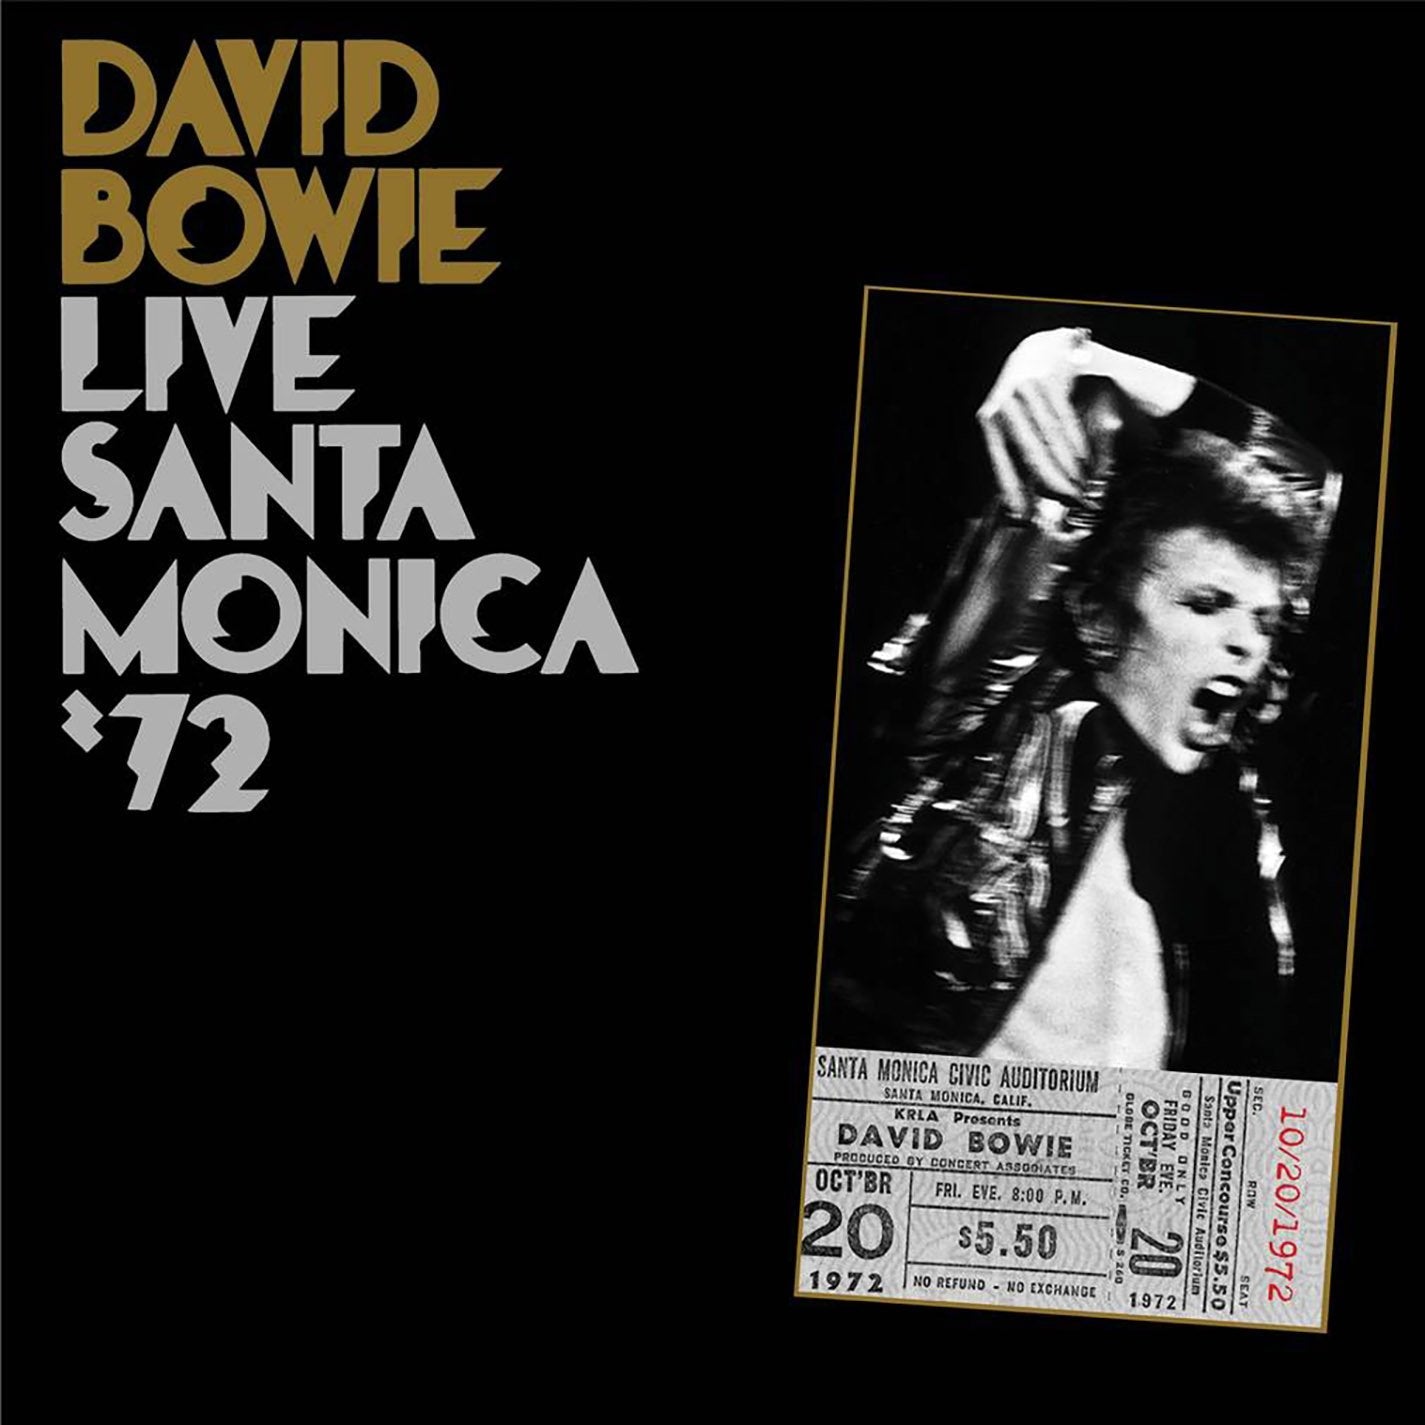 David Bowie Live In Santa Monica 72 Vinyl LP